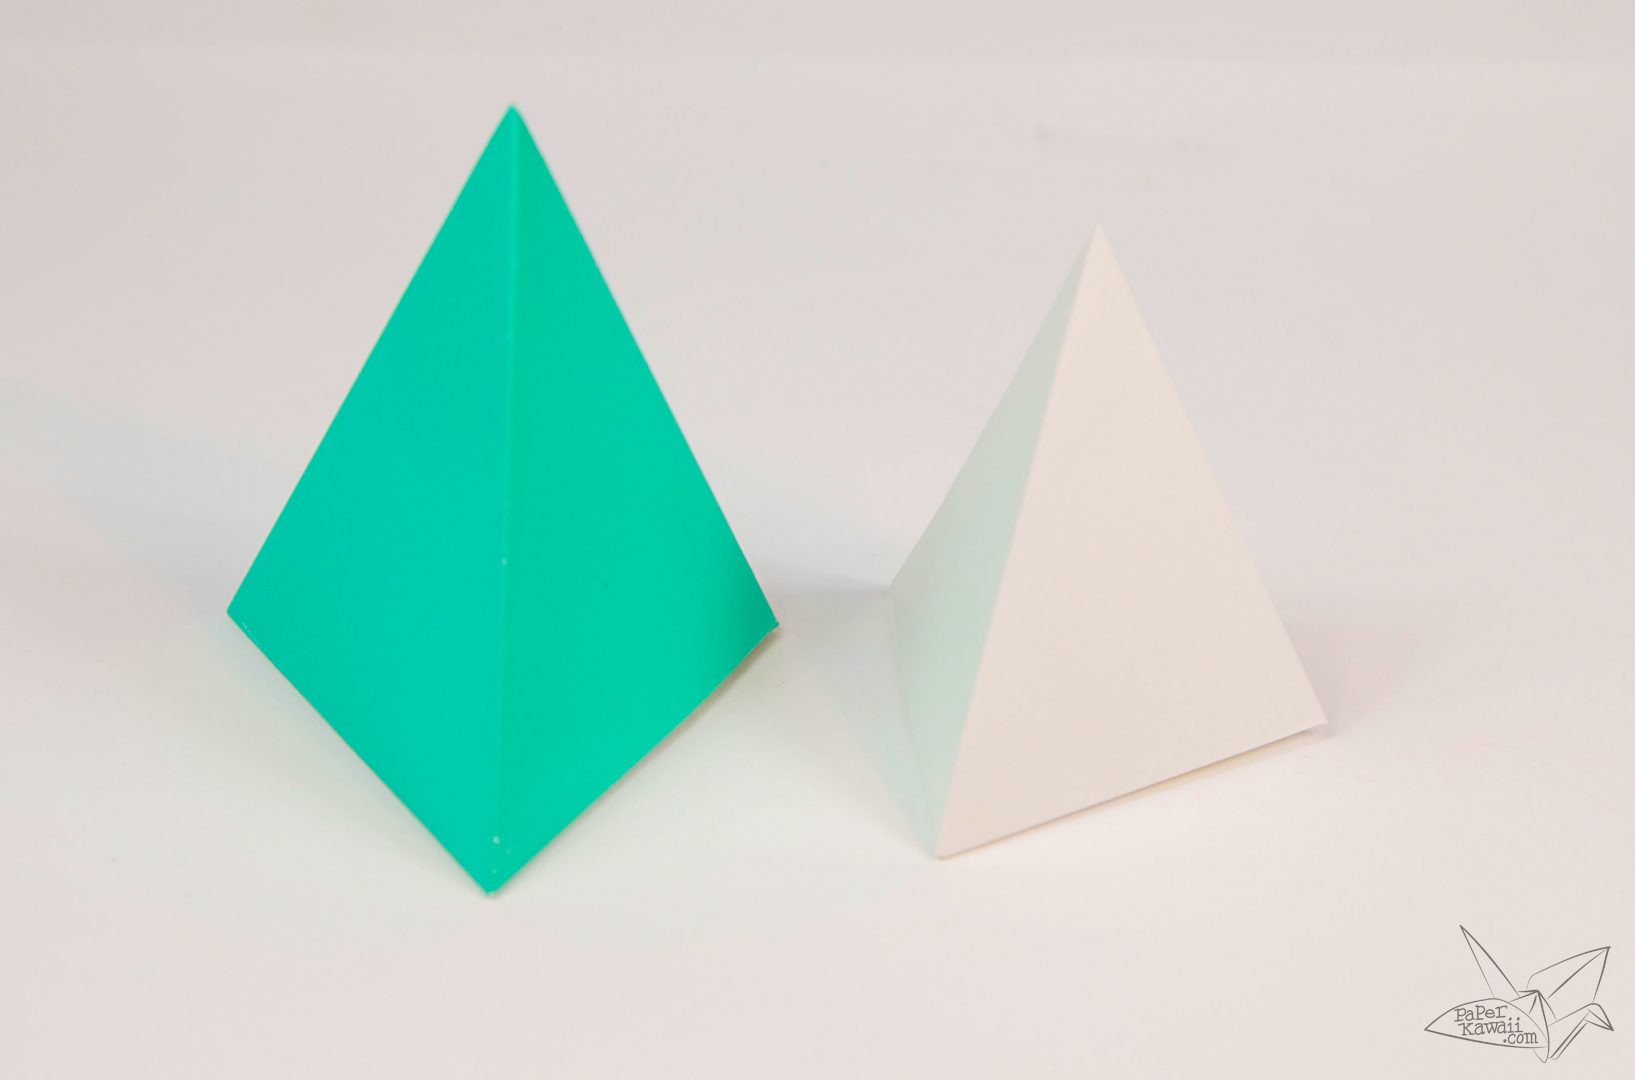 Origami Tetrahedron - 3 Sided Pyramid Tutorial